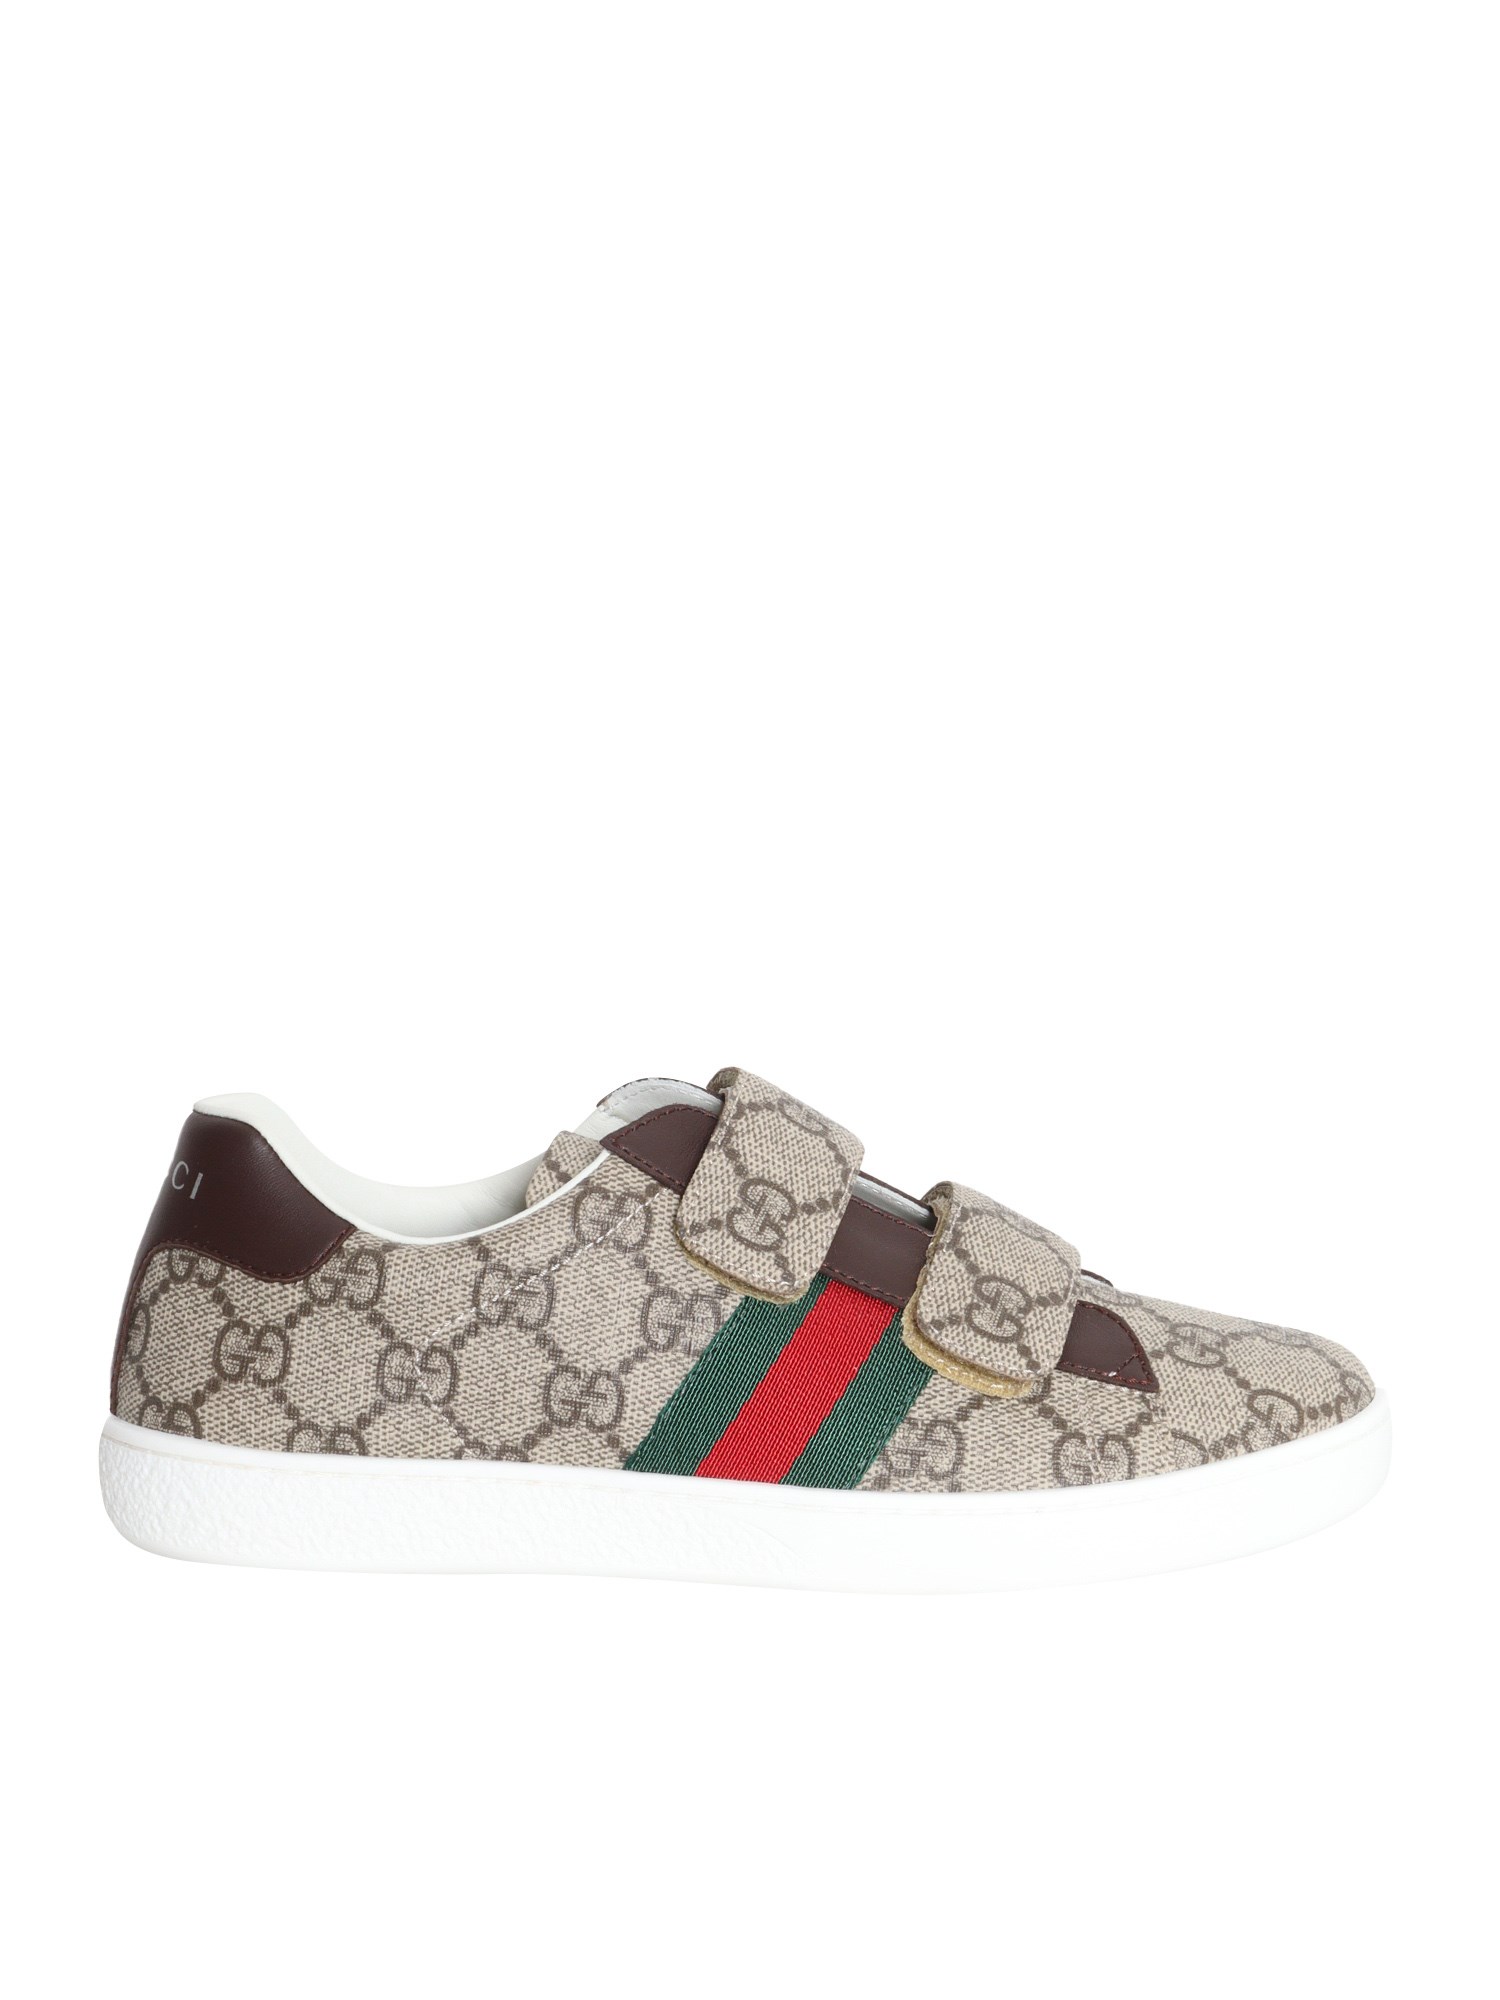 Gucci Gg Plastic Strap Sneakers In Brown